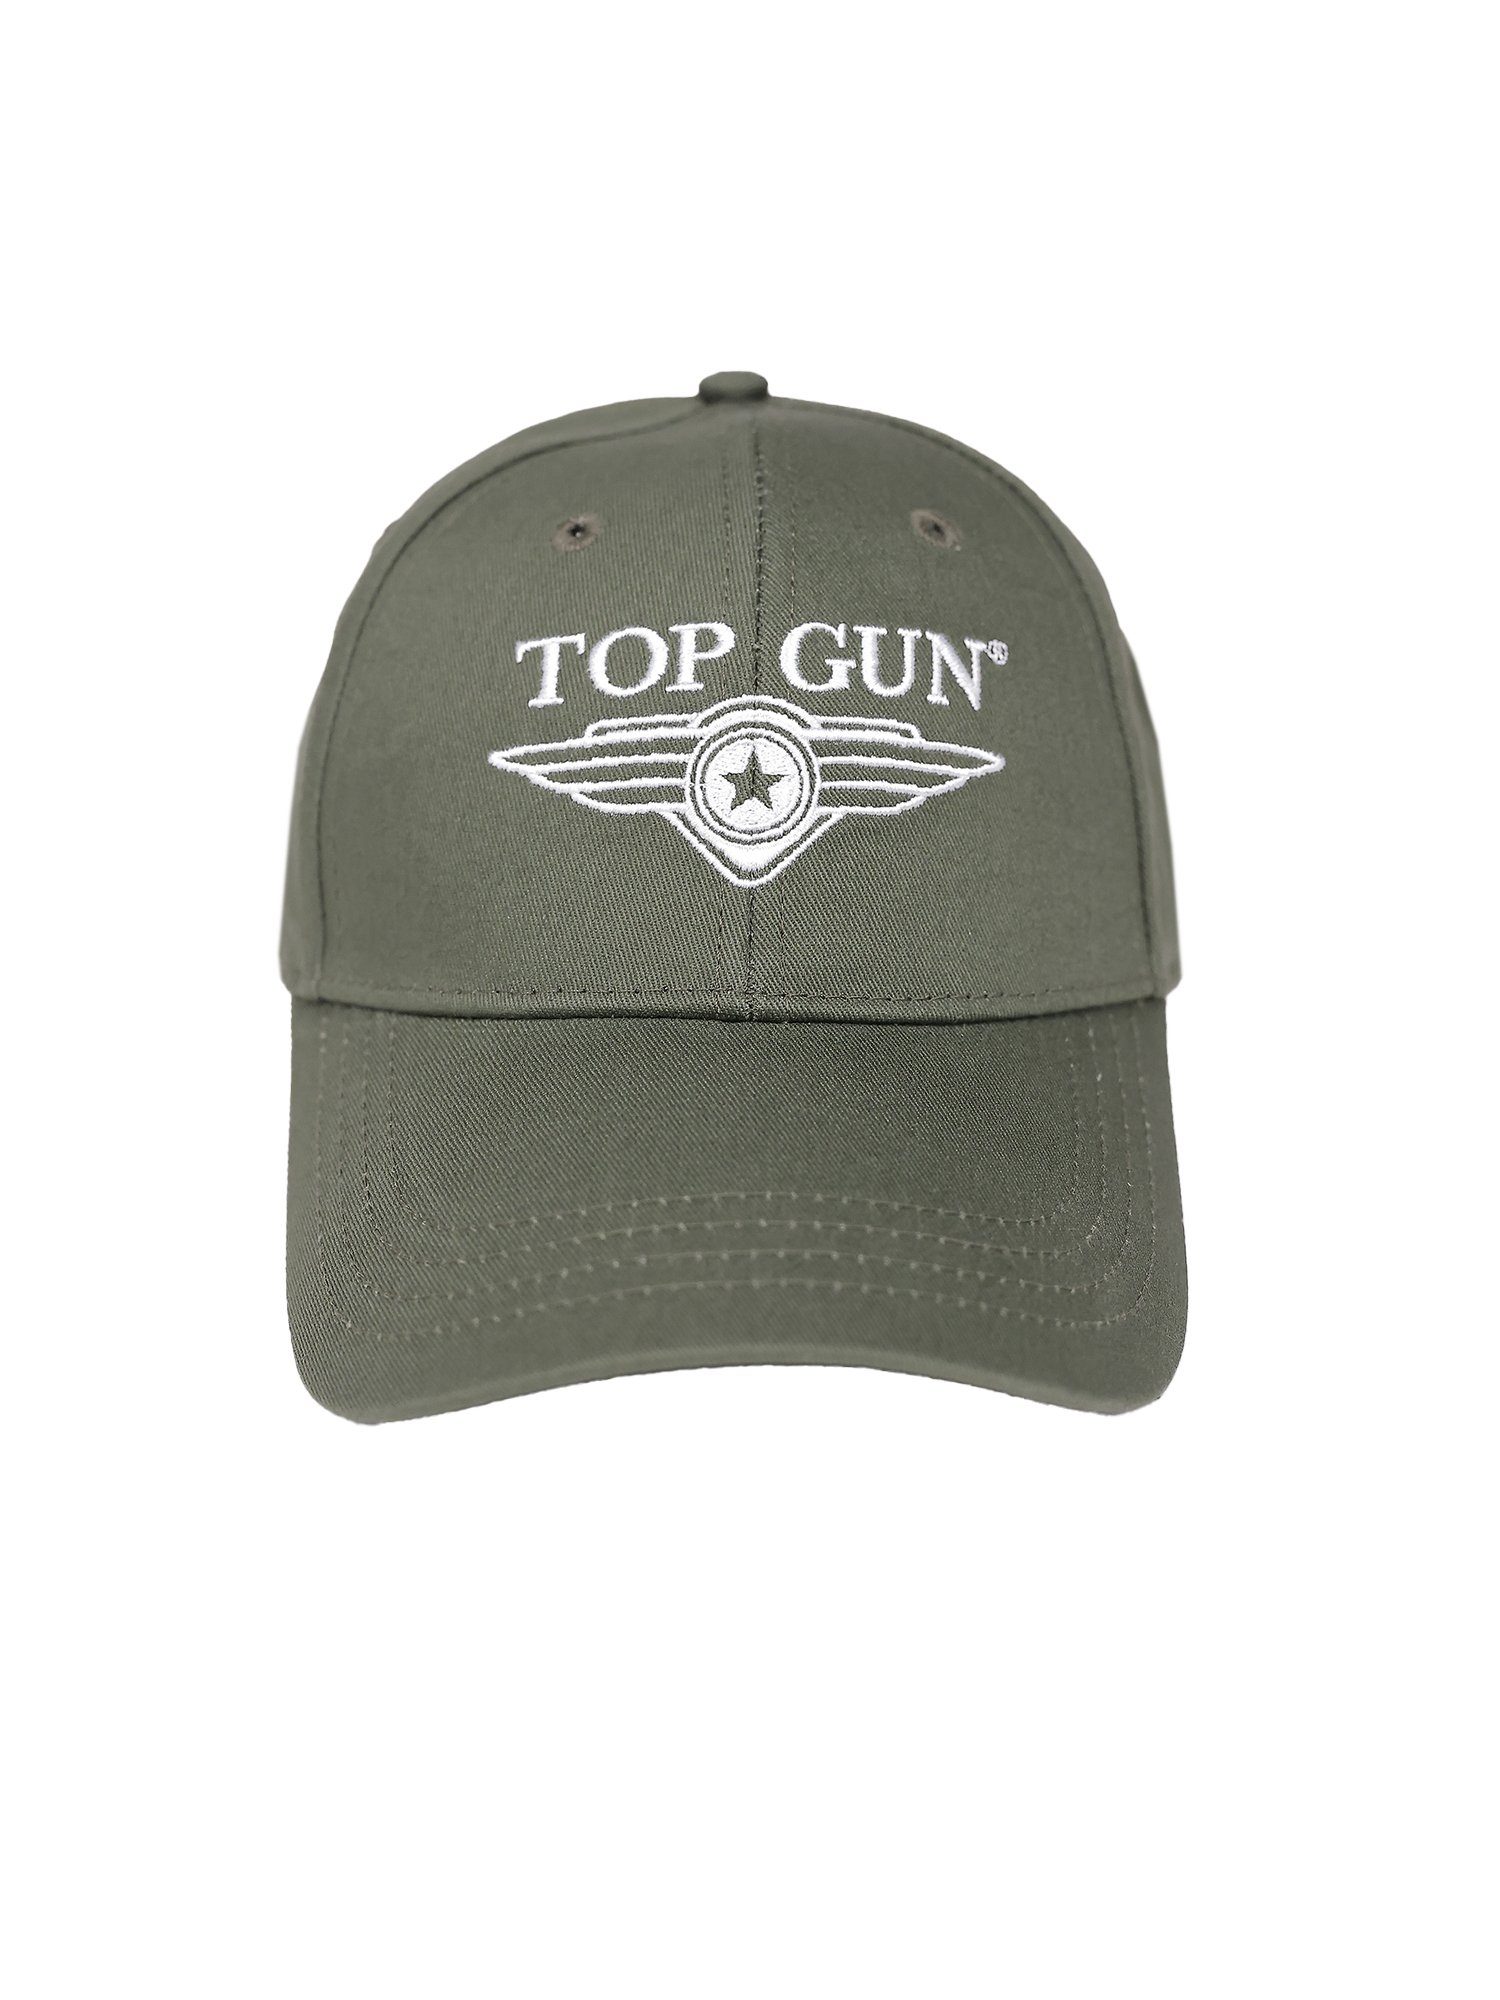 TOP GUN Snapback grau TG22013 Cap